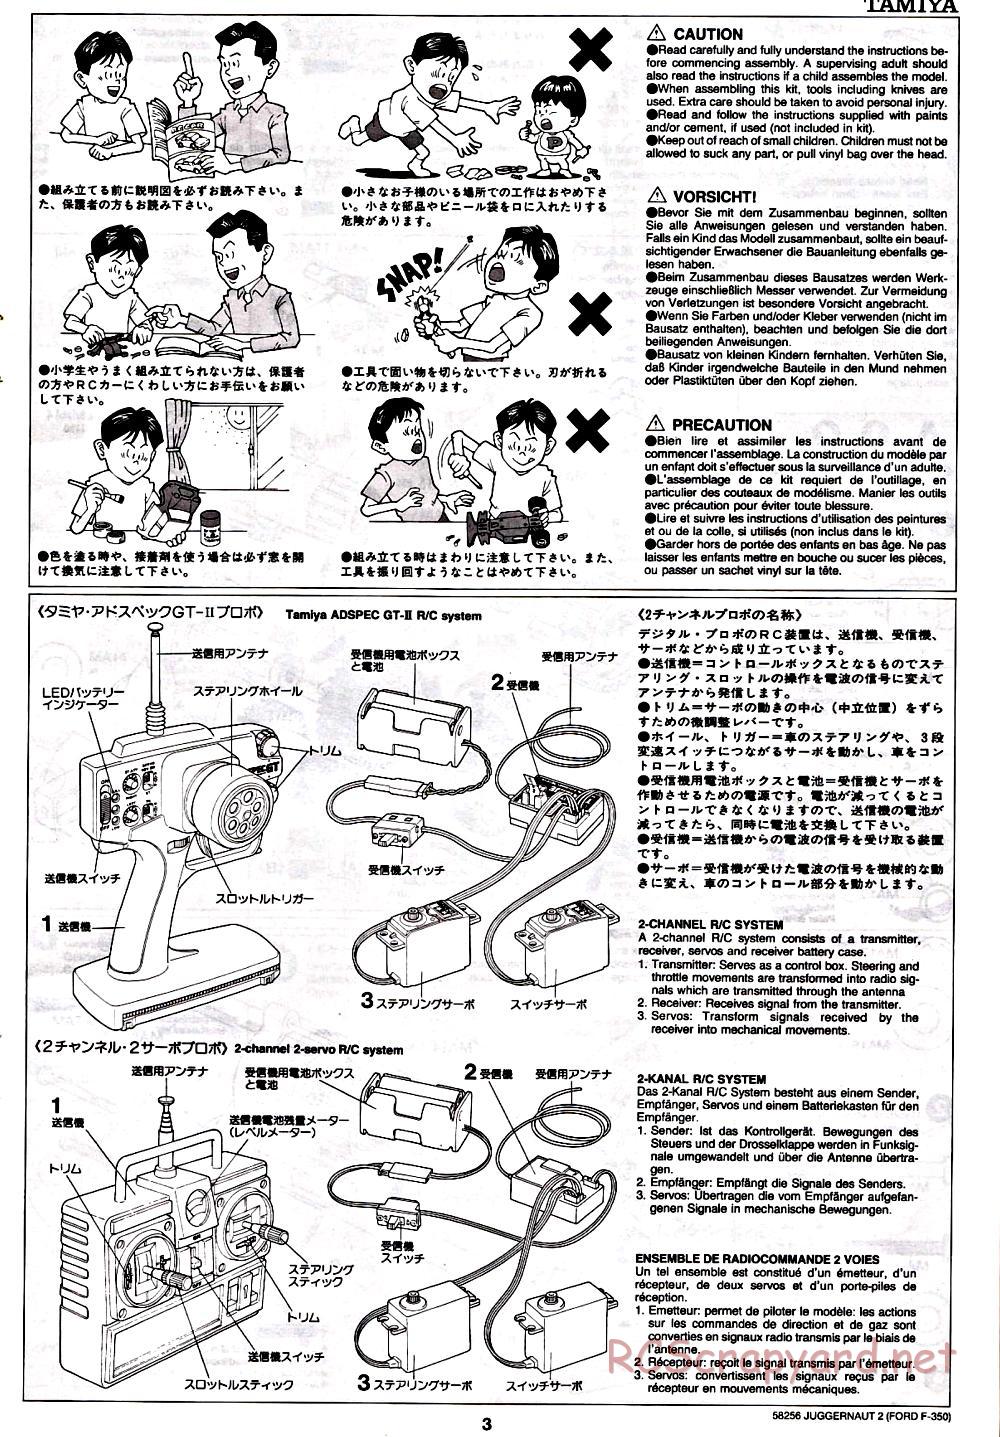 Tamiya - Juggernaut 2 Chassis - Manual - Page 3